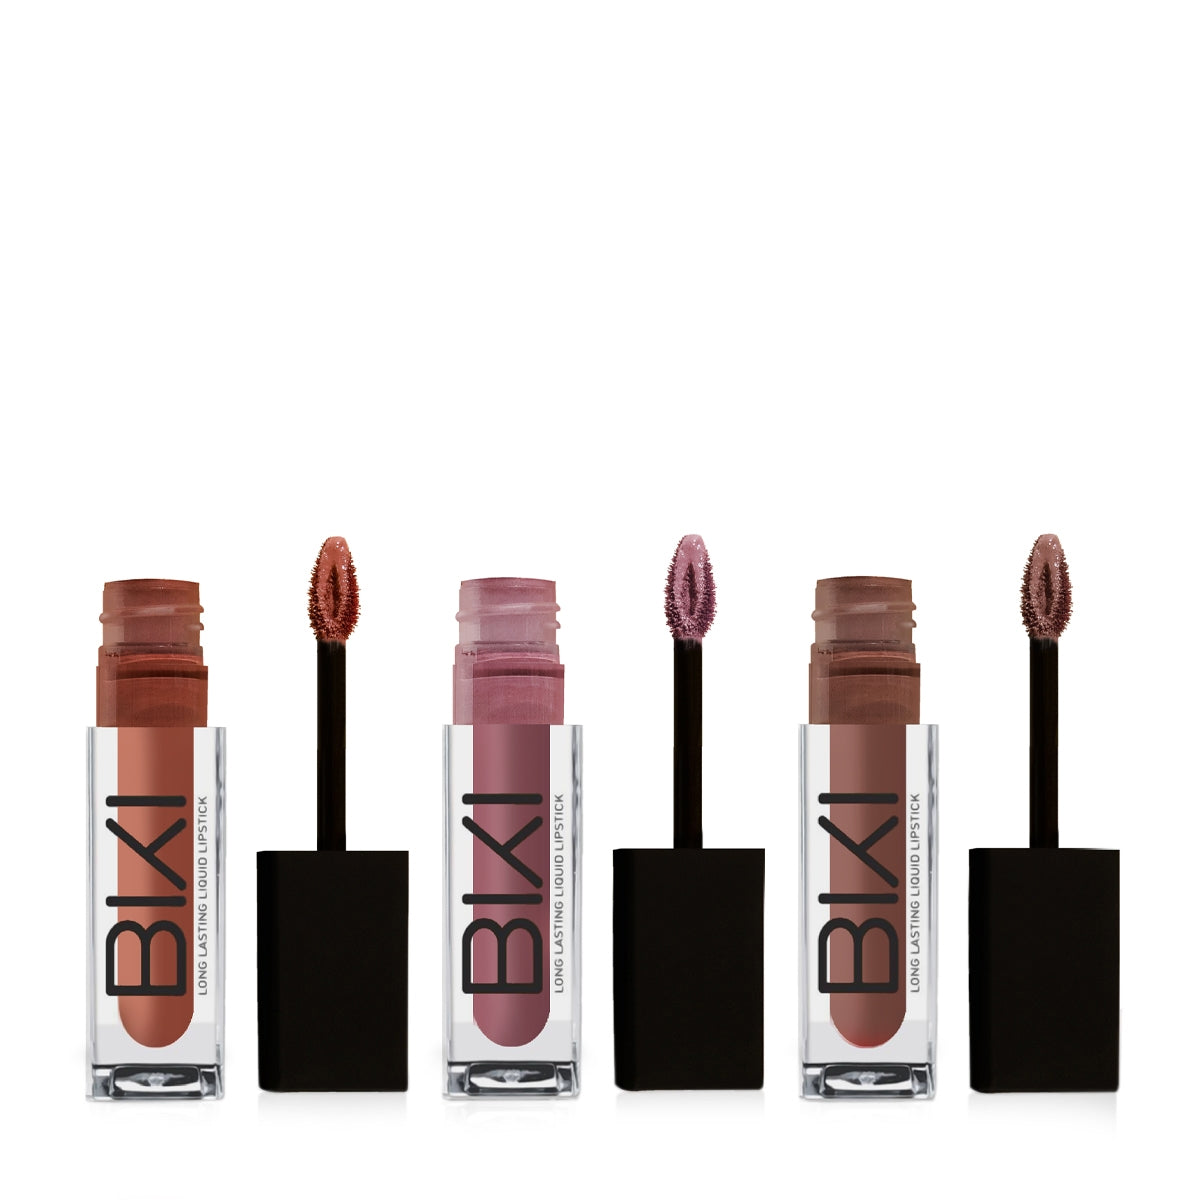 Biki's Set 1 - Pack of 3 Liquid Matte Lipsticks